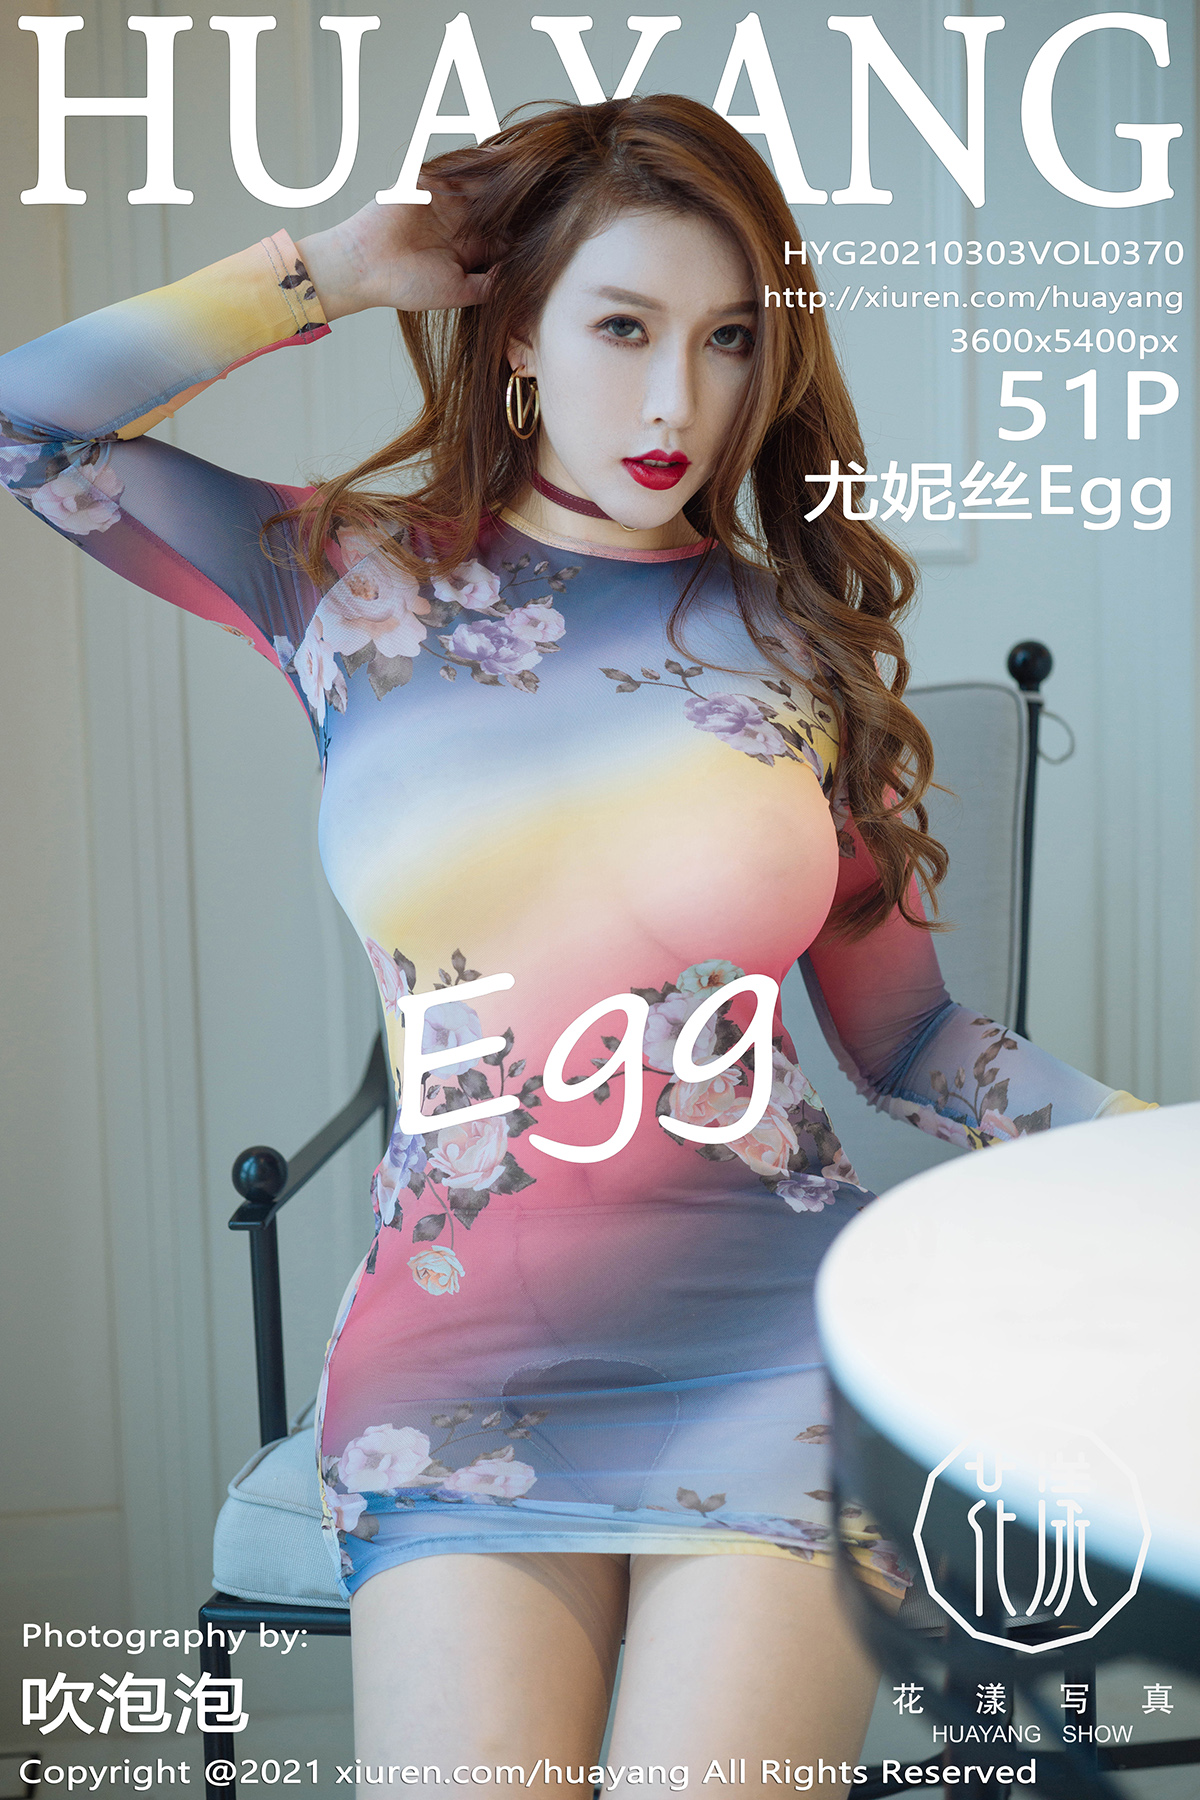 [HuaYang花漾寫真] 2021.03.03 VOL.370 Egg-尤妮絲Egg 廈門旅拍寫真 [51P] - 貼圖 - 清涼寫真 -